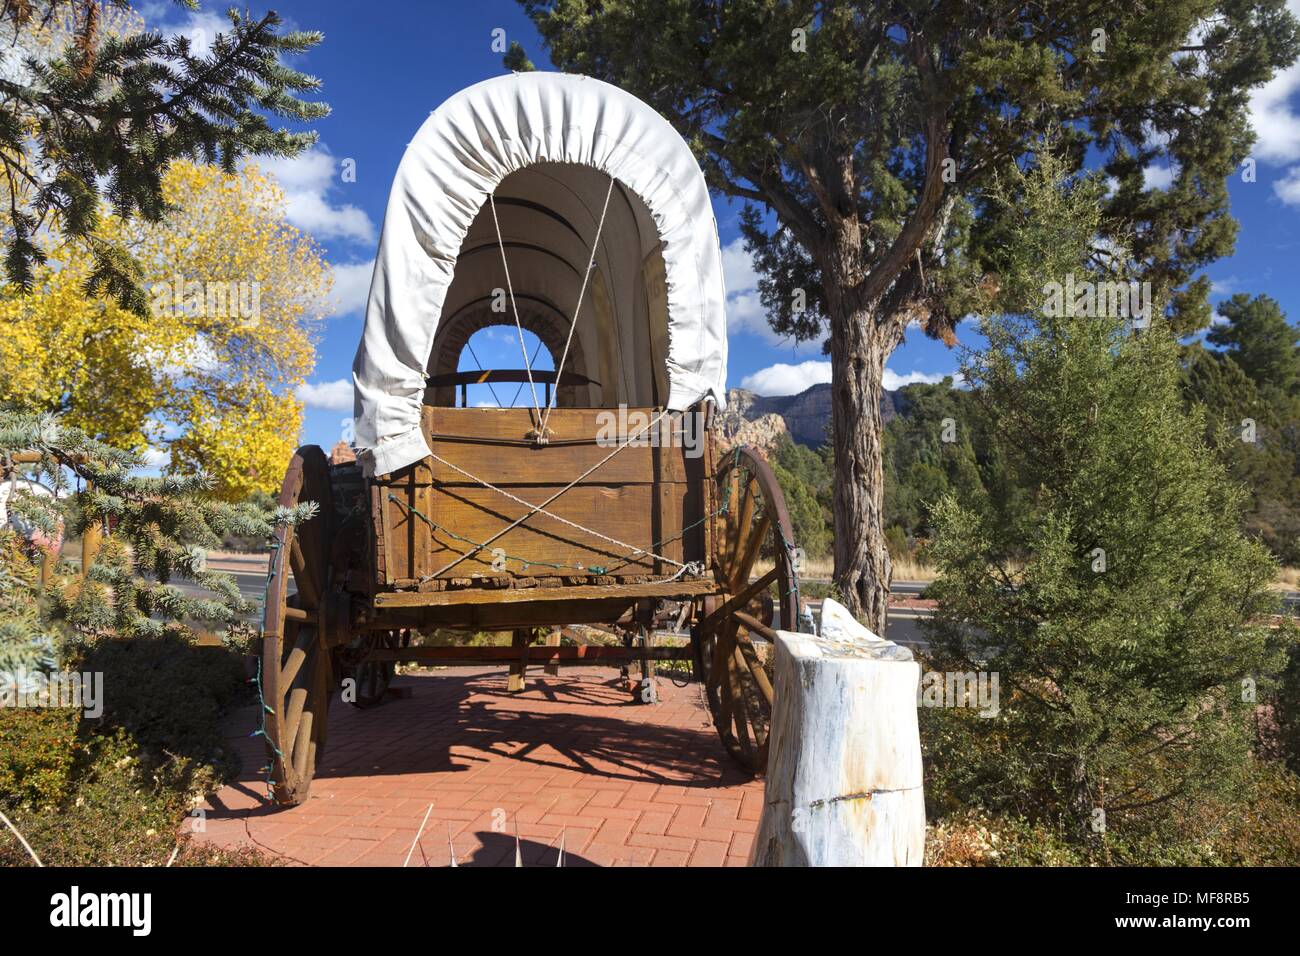 Model Exhibit of Old Wild West Pioneer Rustic Wooden Wagon Wheel Stagecoach in Sedona Arizona Stock Photo